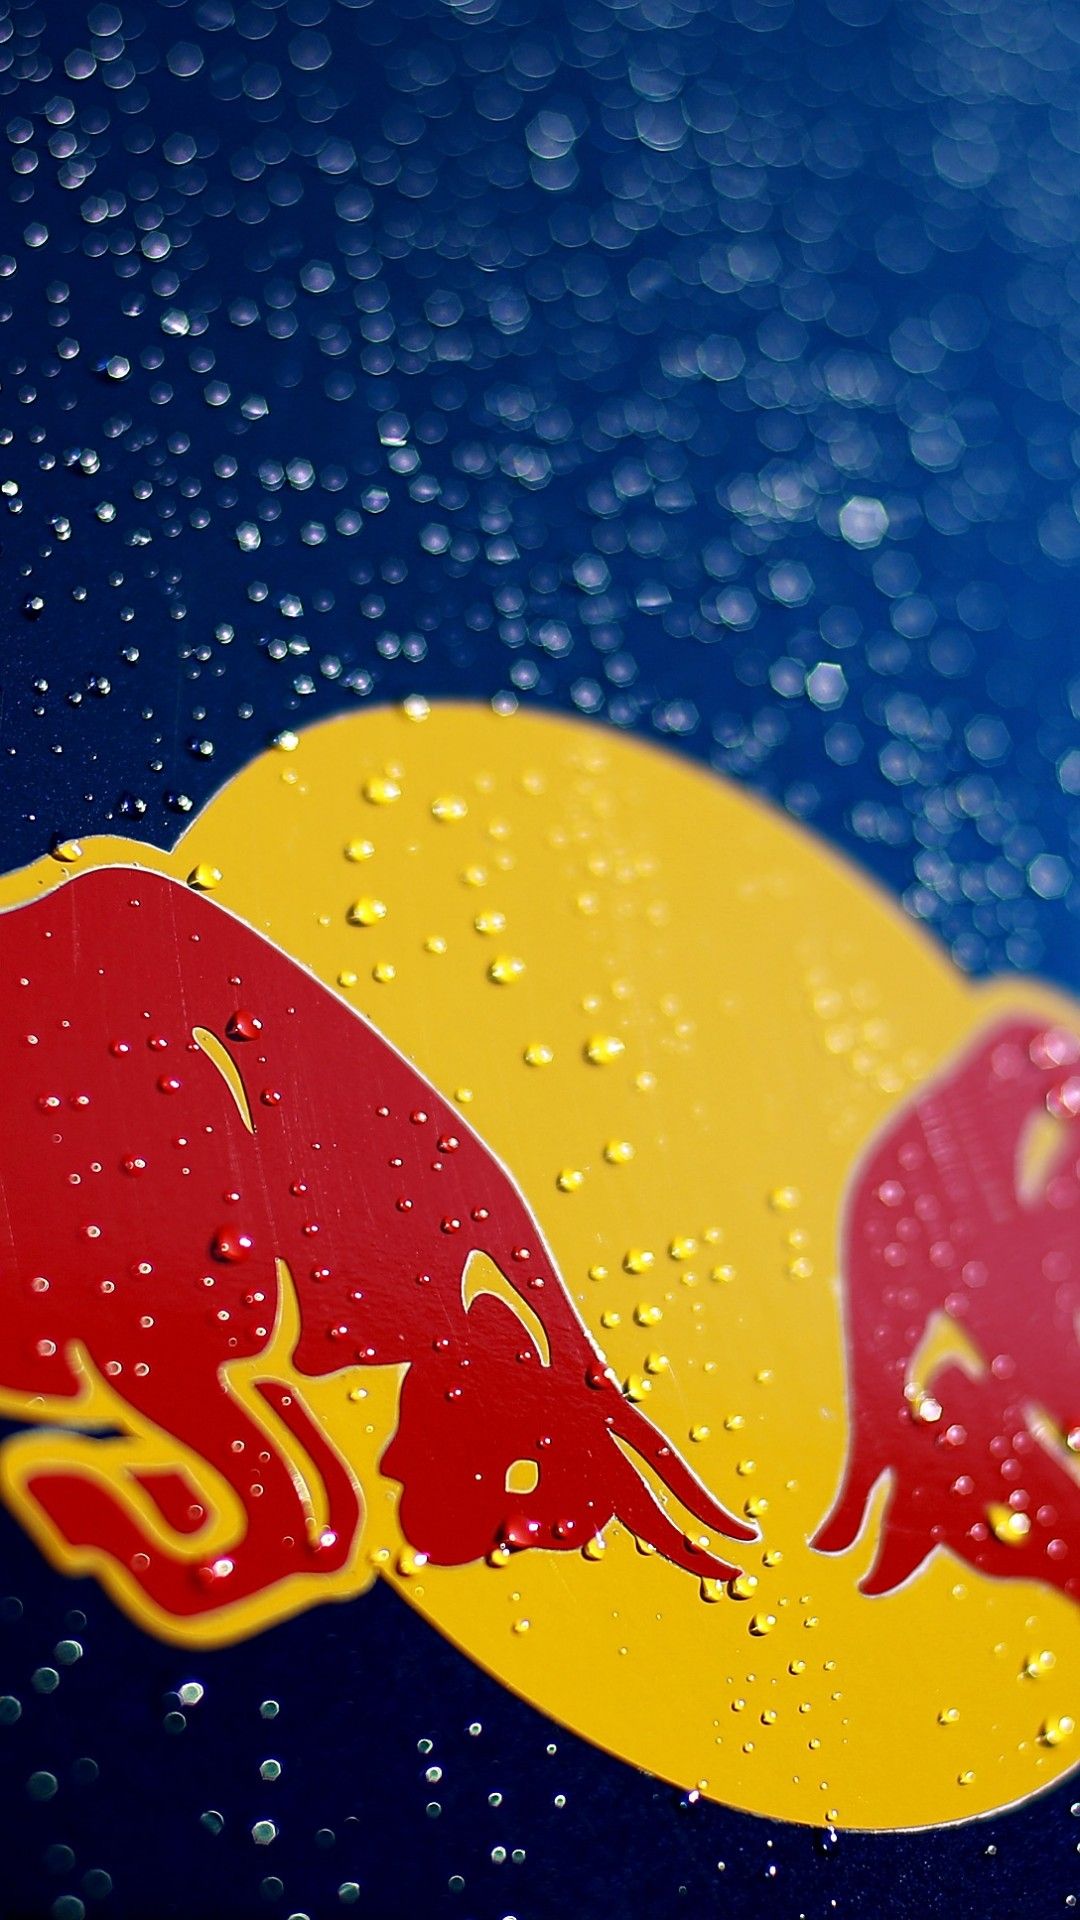 Red Bull Wallpaper 4k .wallpapertip.com